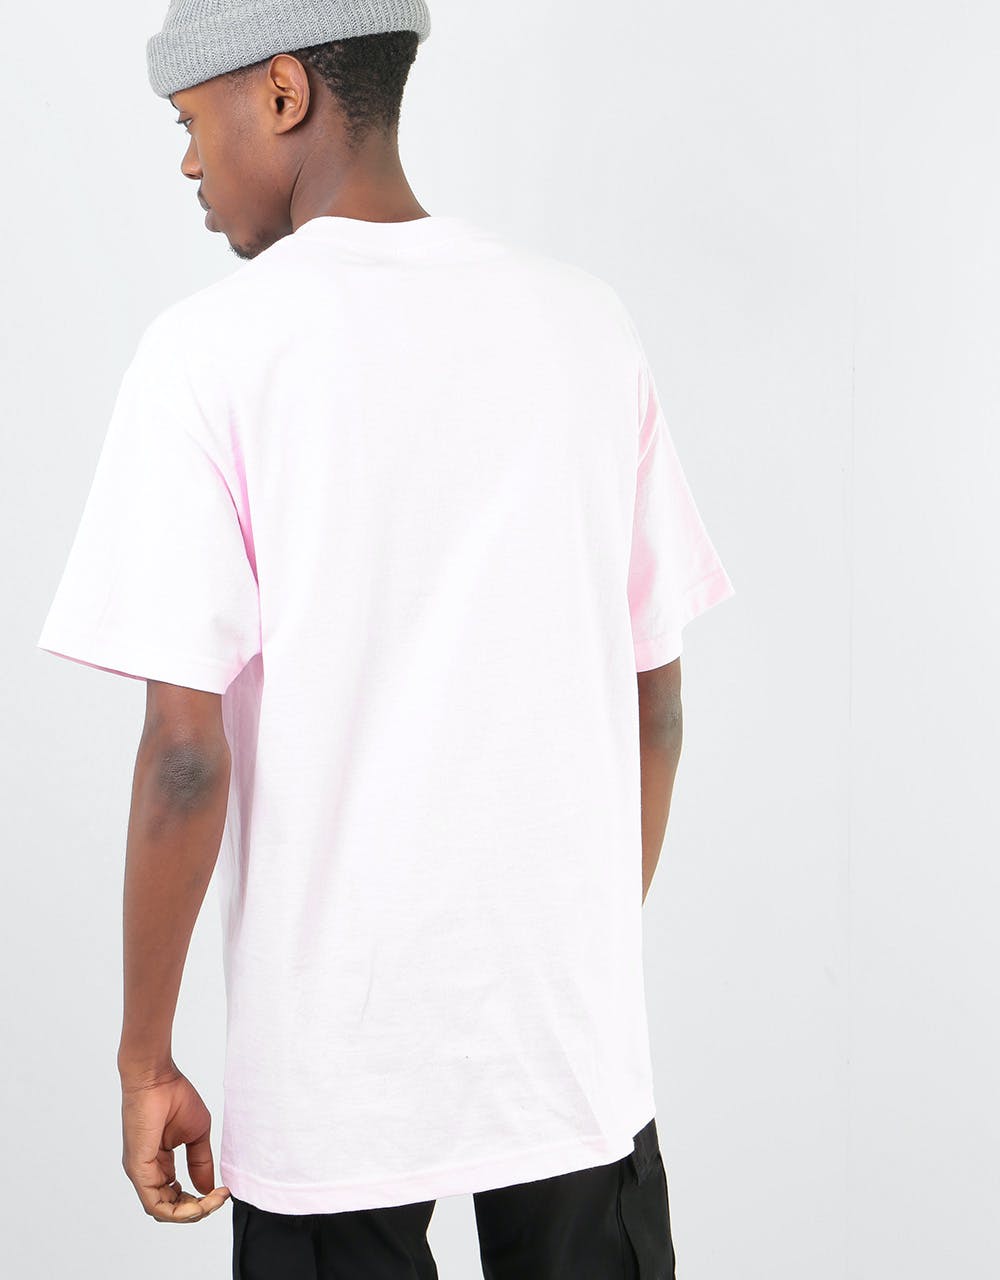 Primitive x Rick & Morty Nuevo R&M Skate T-Shirt - Pink